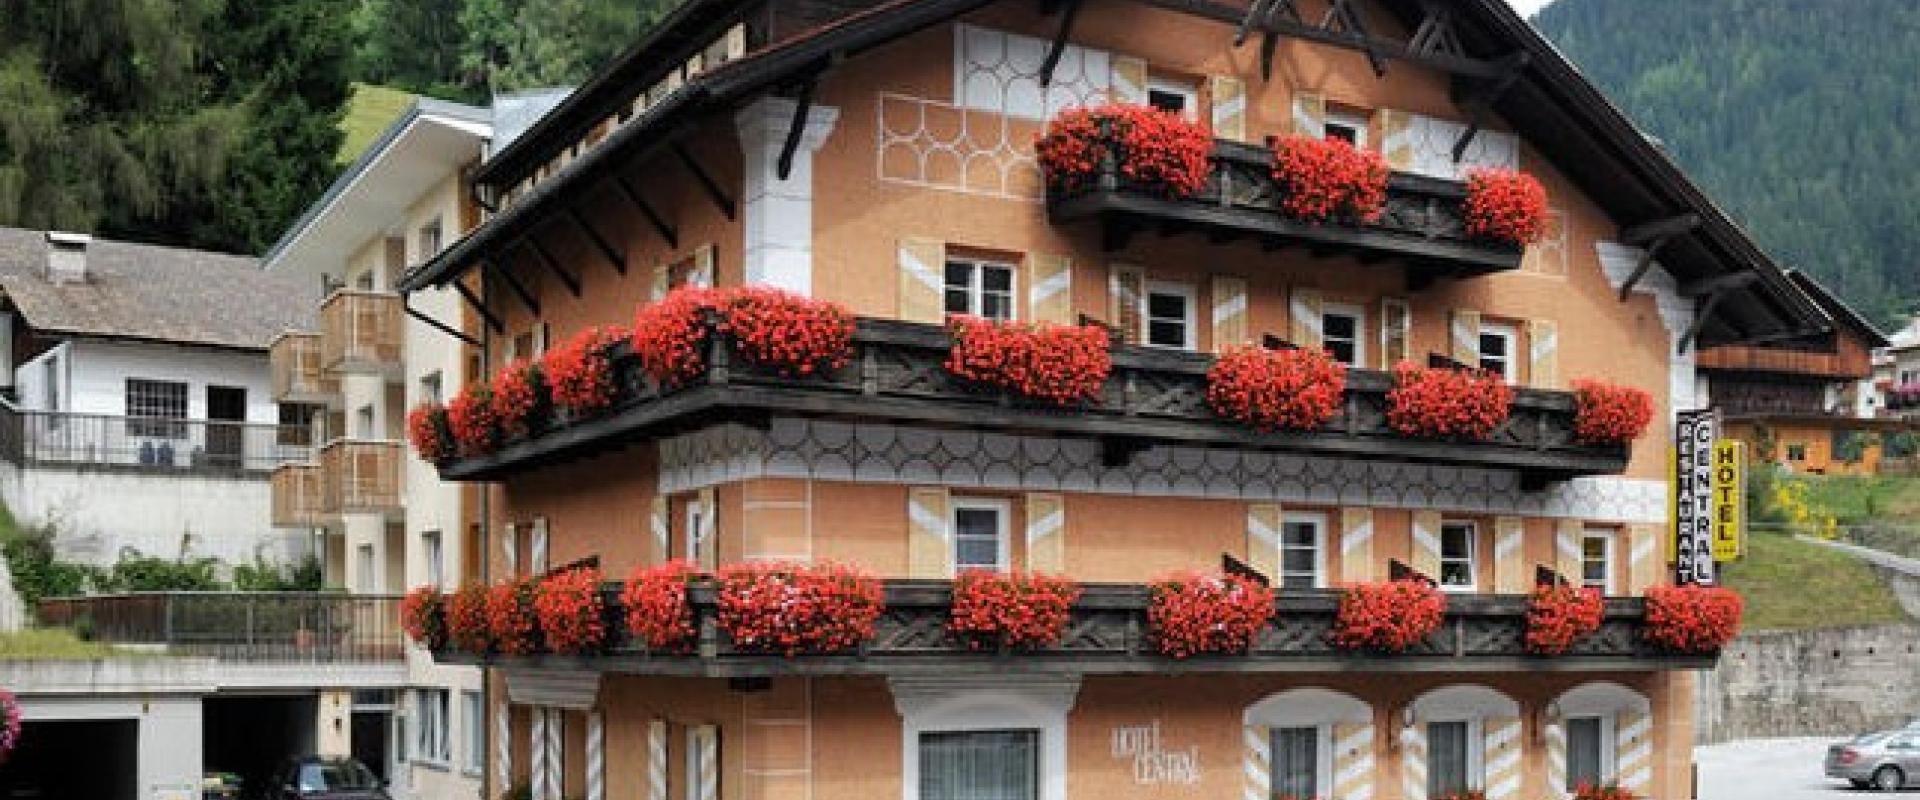 11941 Biker Hotel Central in Südtirol.jpg